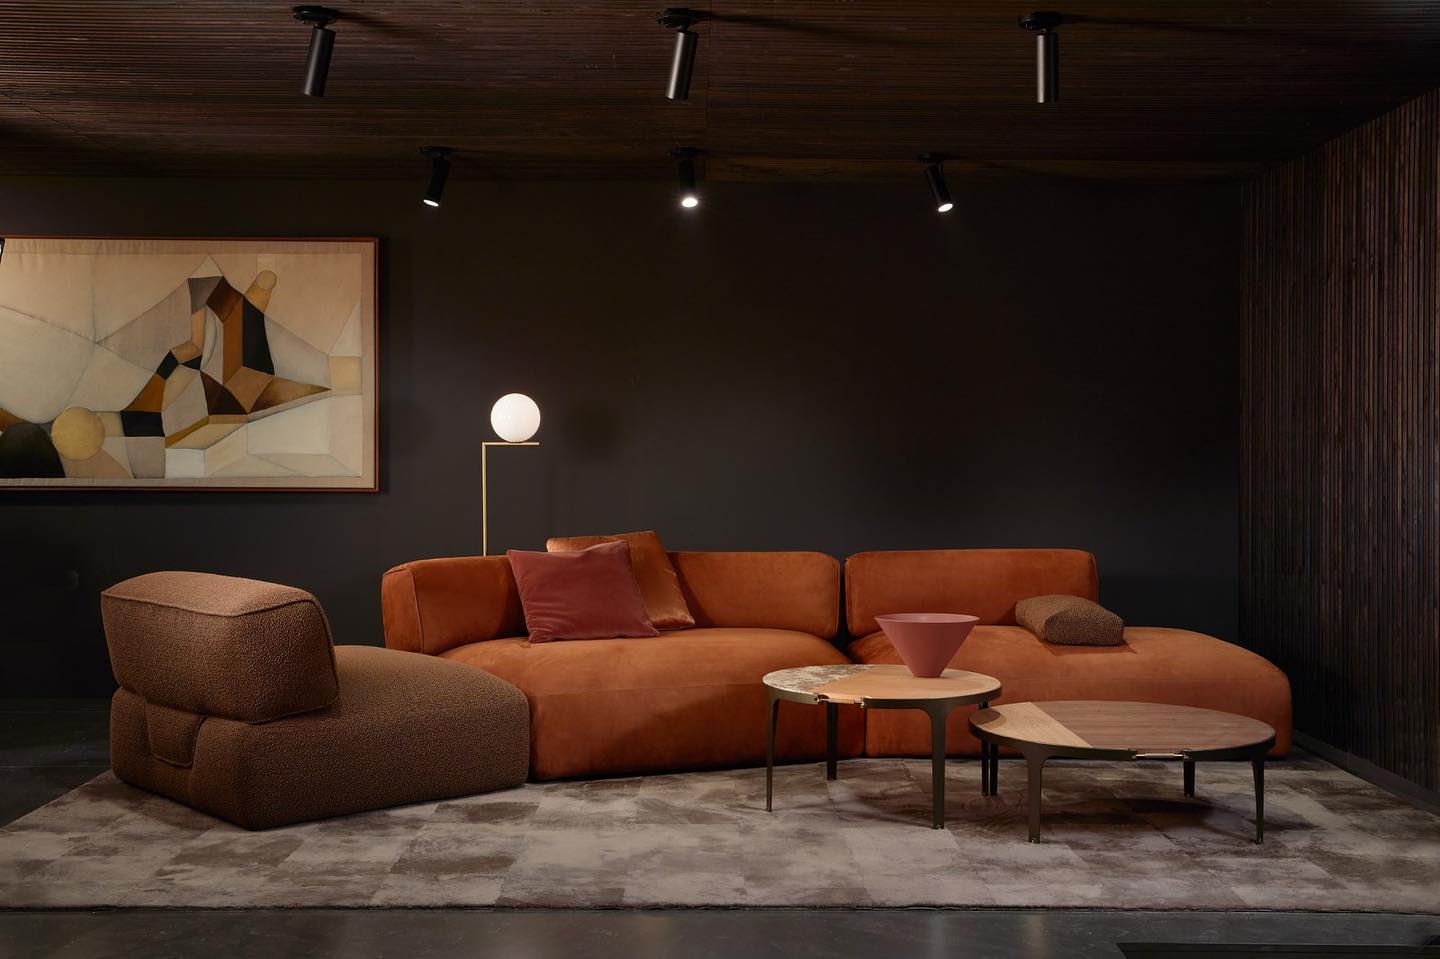 NEW: Gilbert sofa by Sebastian Herkner and the Clamp table by Sjoerd Vroonland in Milan. Visit our stand F19 in Hall 7
.
.
.
.
.

#linteloo #gilbert #clamp #salonedelmobile #urban #living #design #designer #homevibes #interiordesign #quality #interiorinspiration #modernhome #inspire #styling #interiorstyling #homedetails #sofalife #art #bestinterior #desire #furnituredesign #thegoodlife